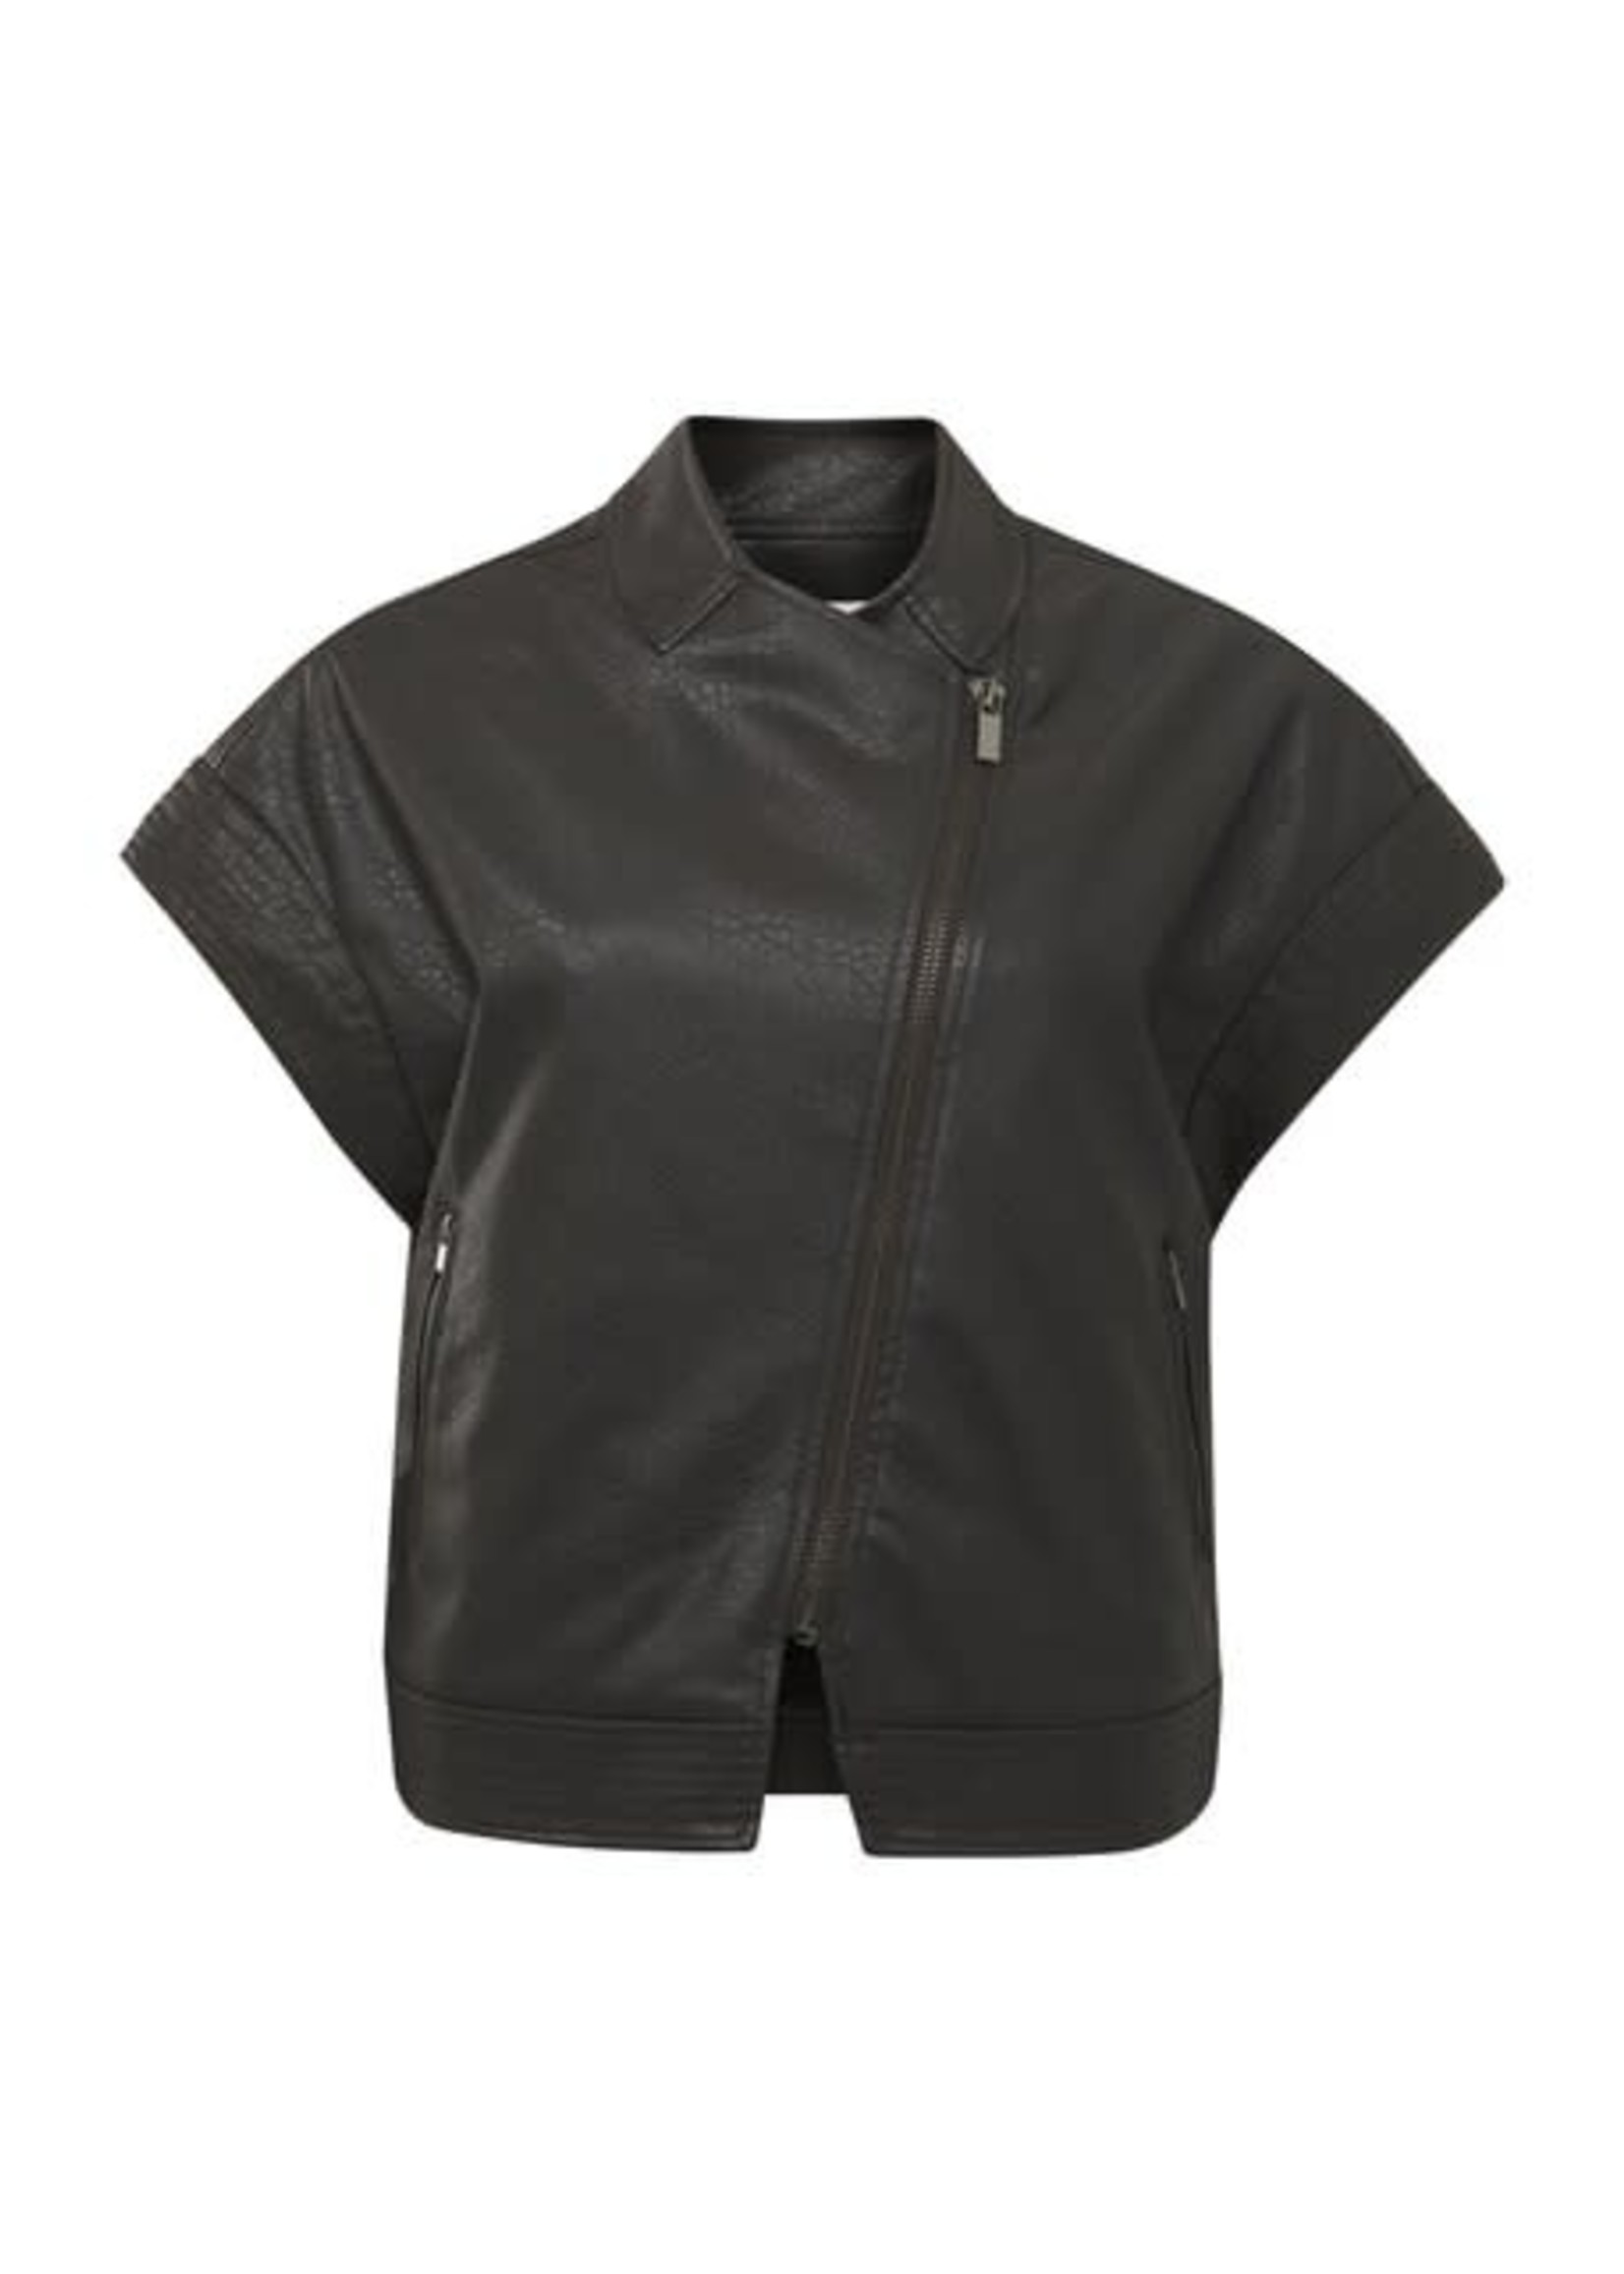 Yaya Yaya, Sleeveless jacket in faux leather pockets and zippers, Seal Brown